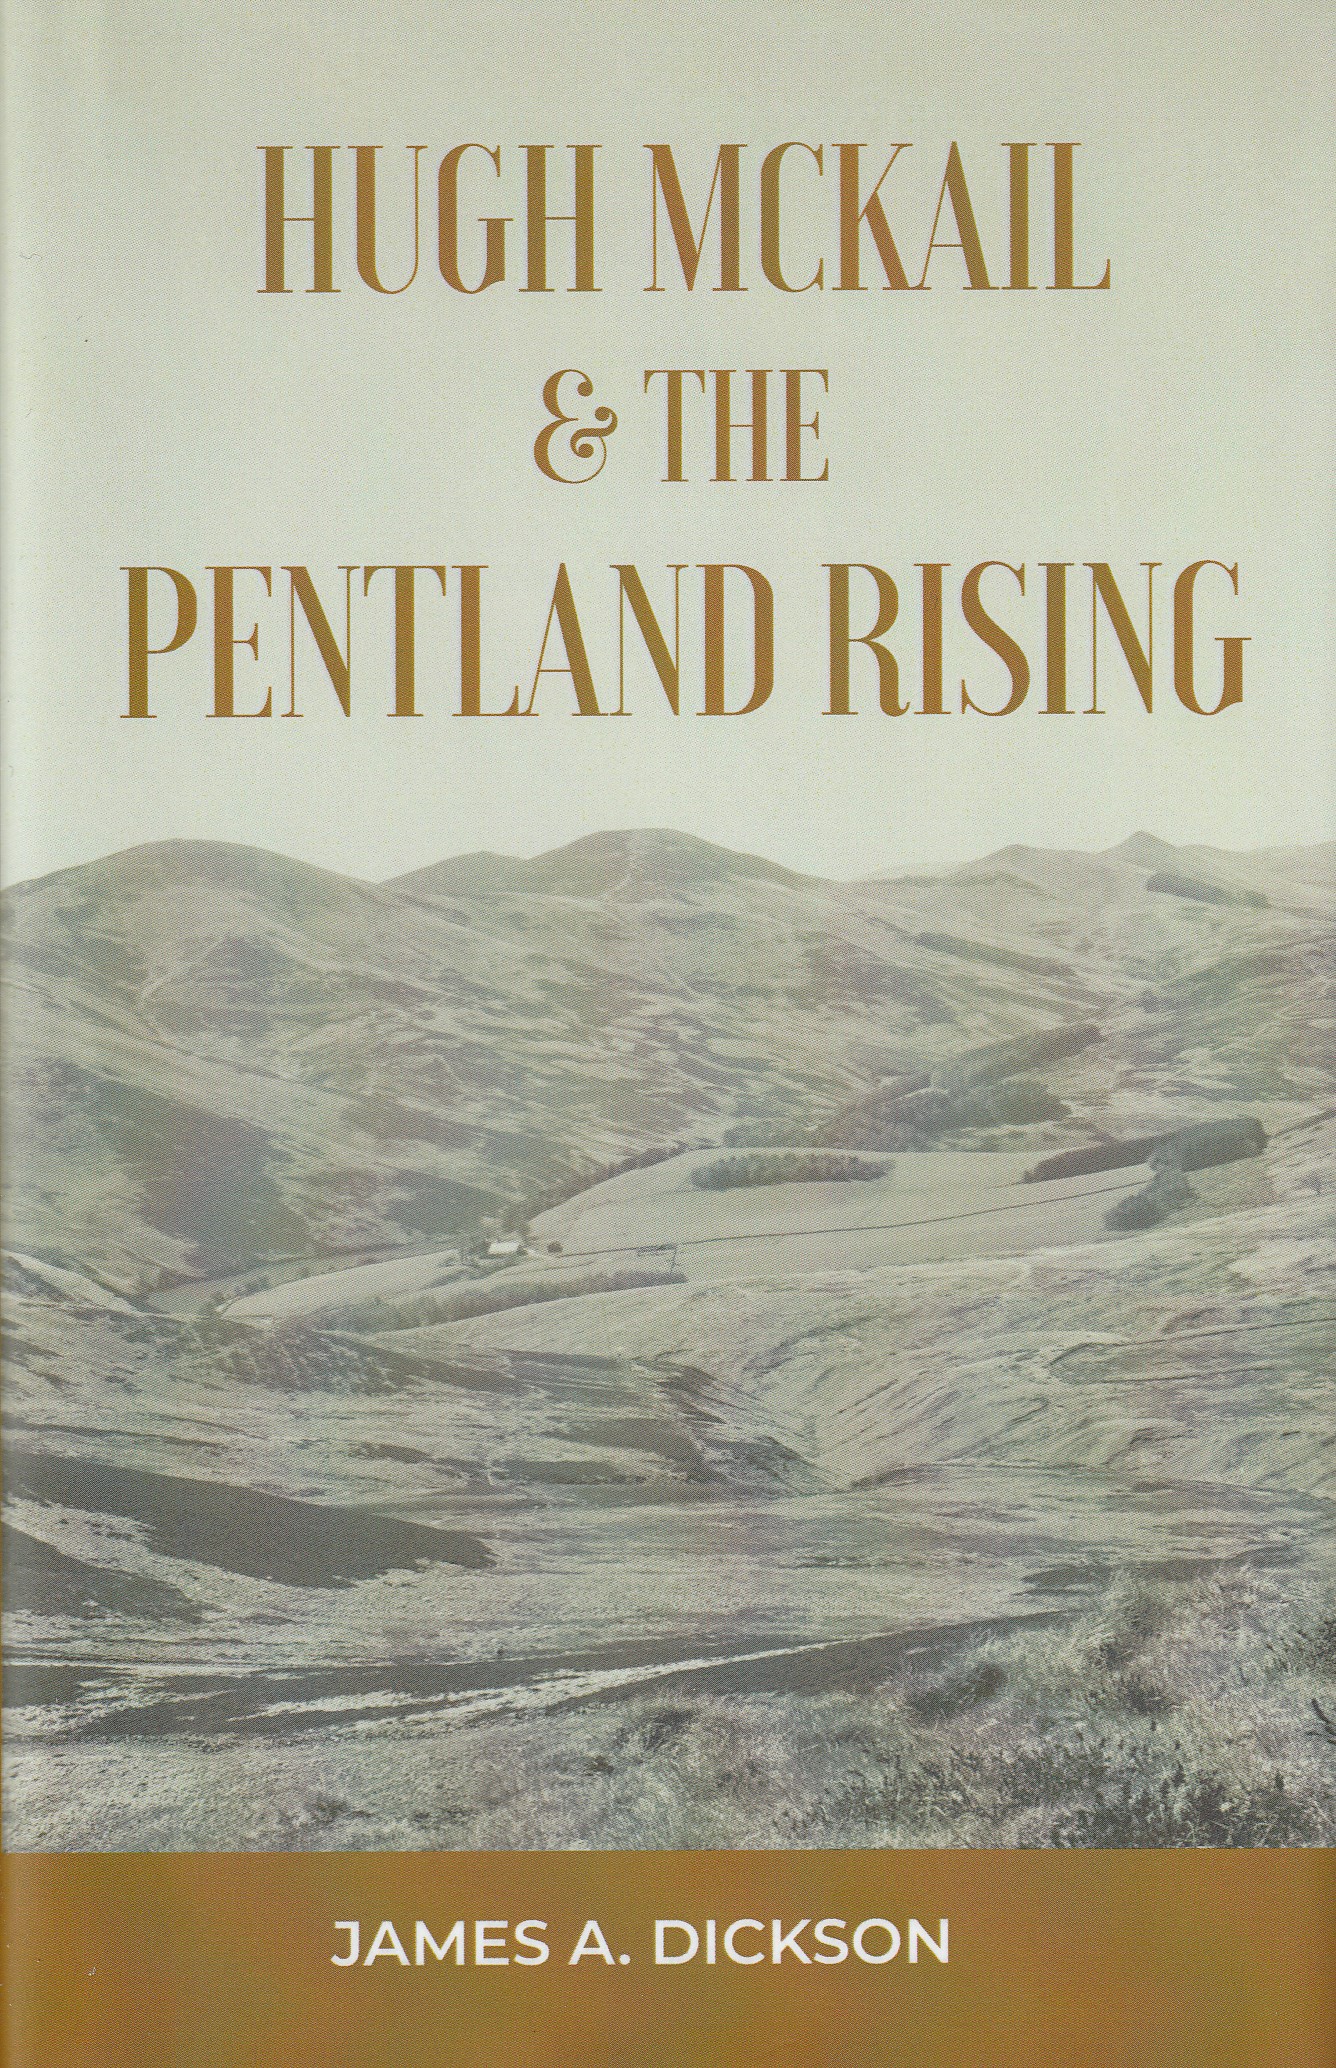 Hugh McKail and the Pentland Uprising